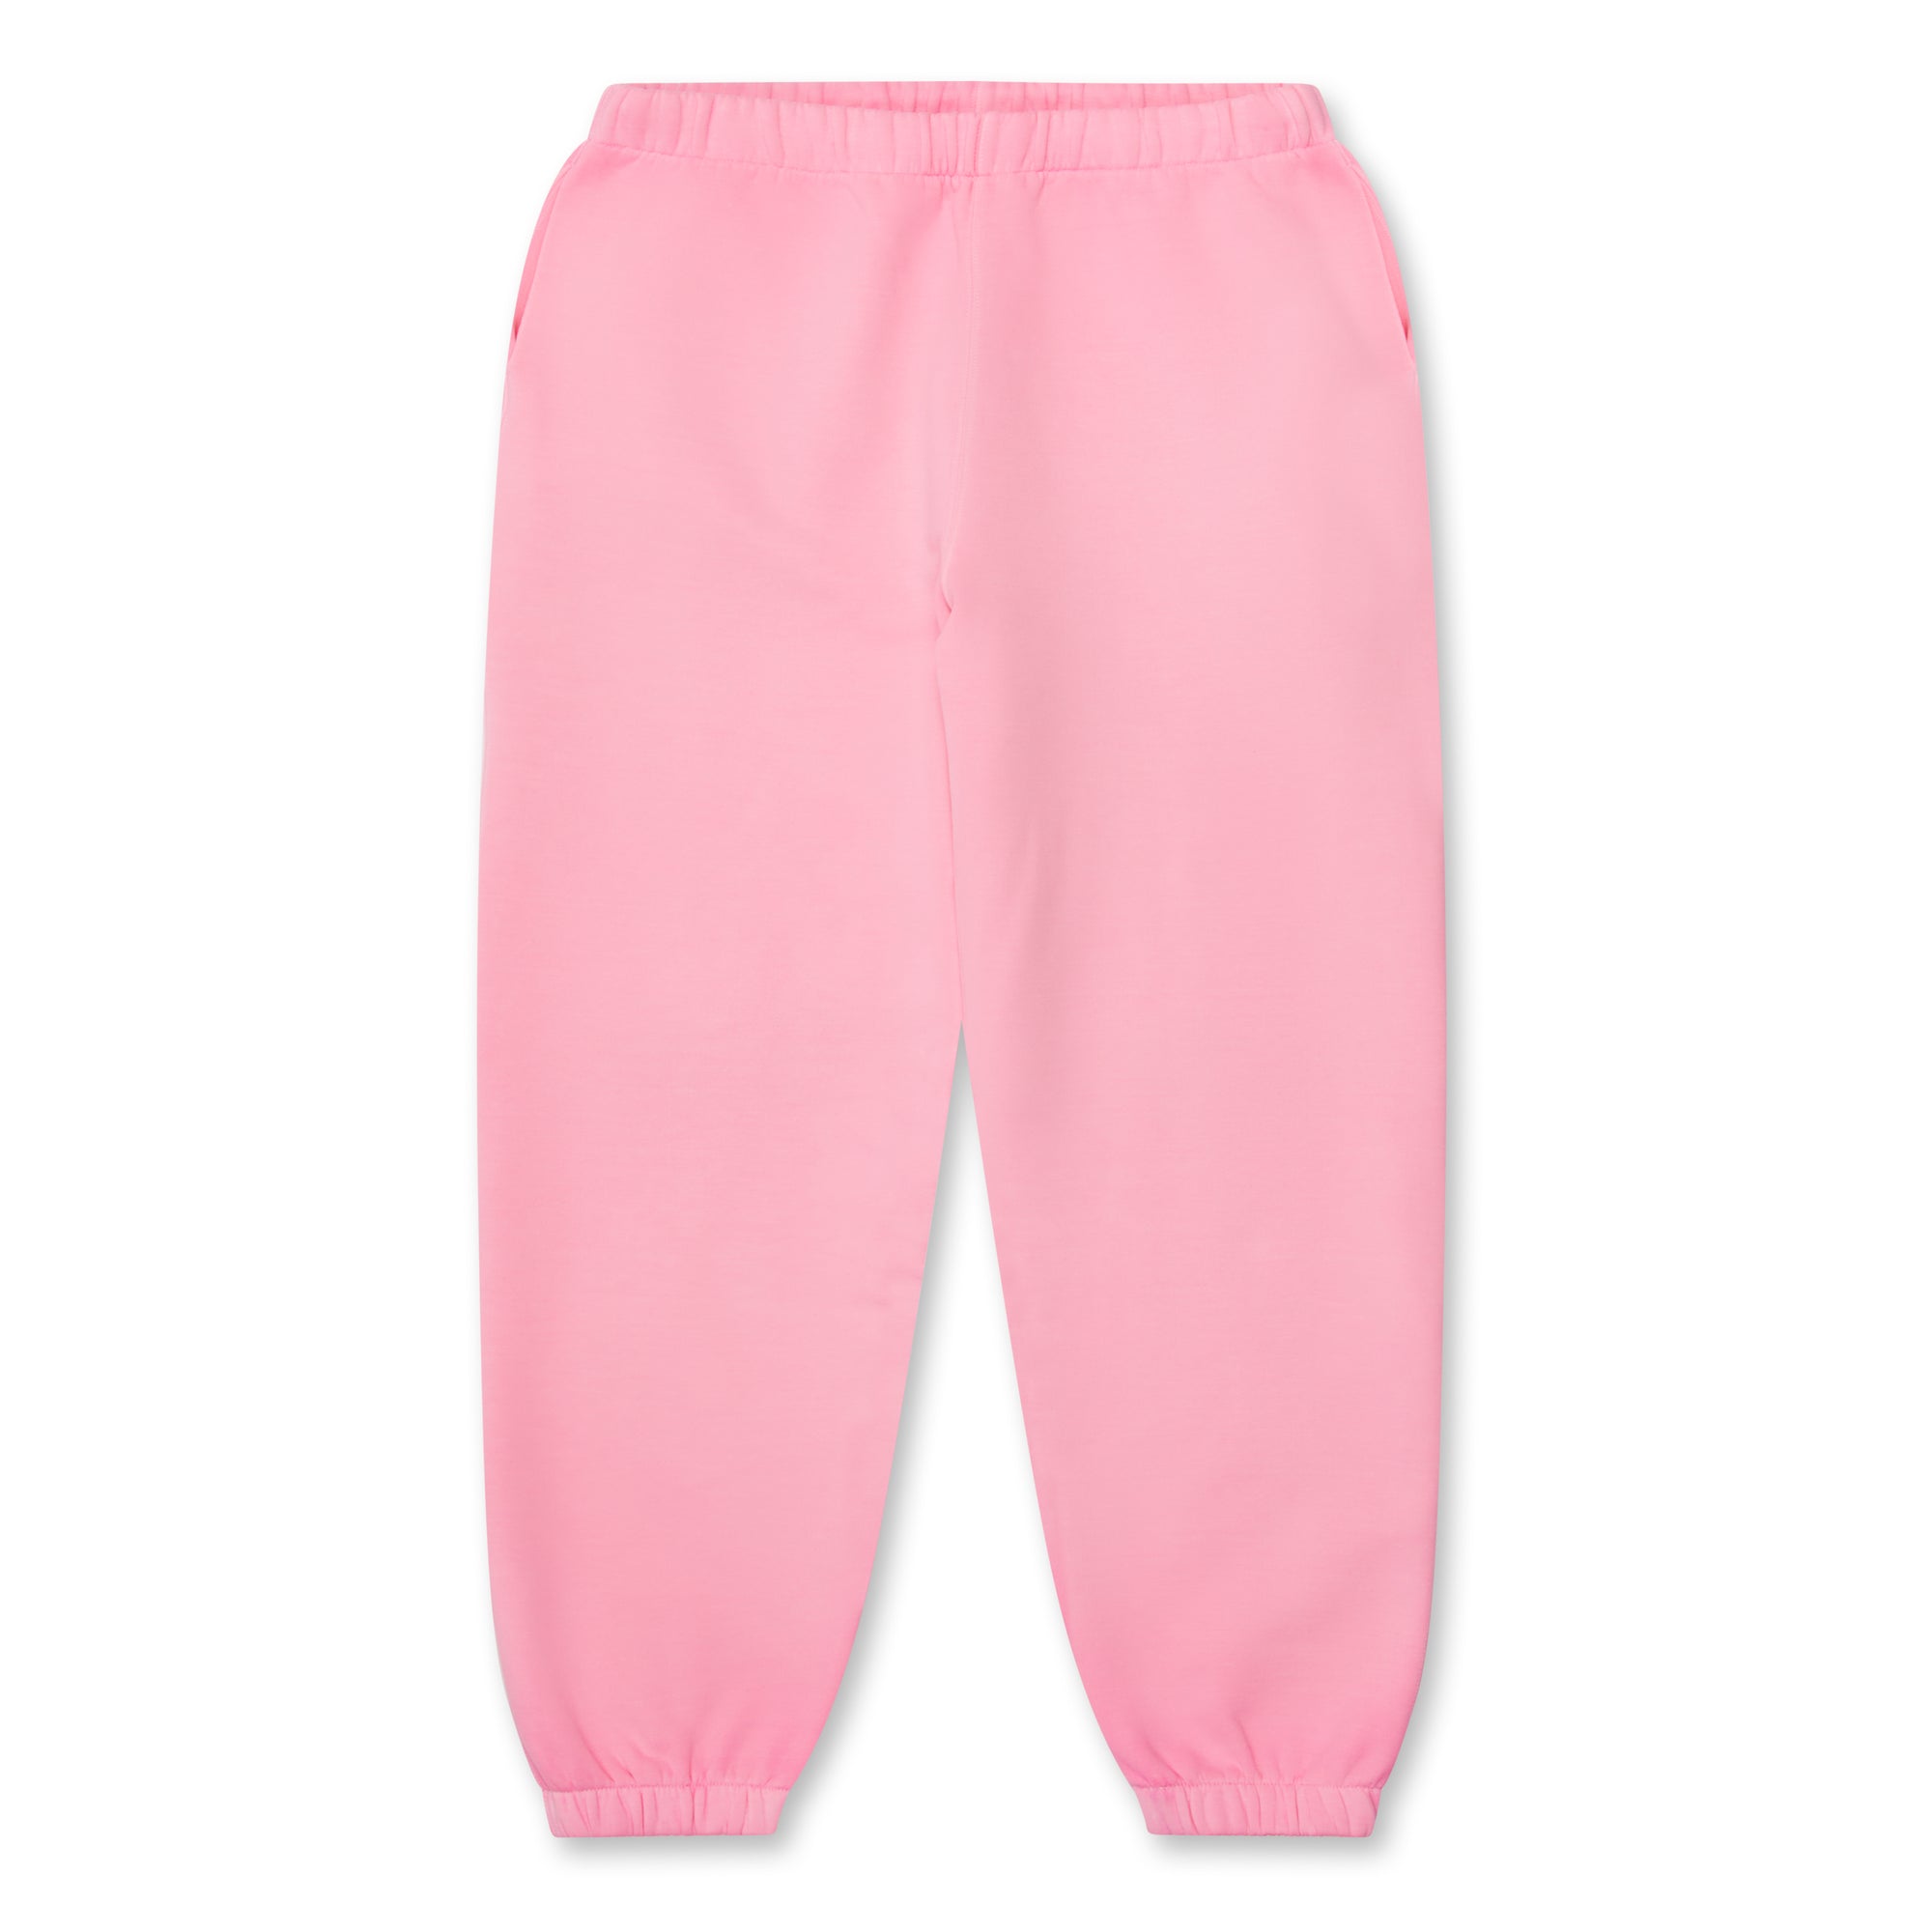 ERL - Fleece Knit Sweatpants - (Pink) view 1